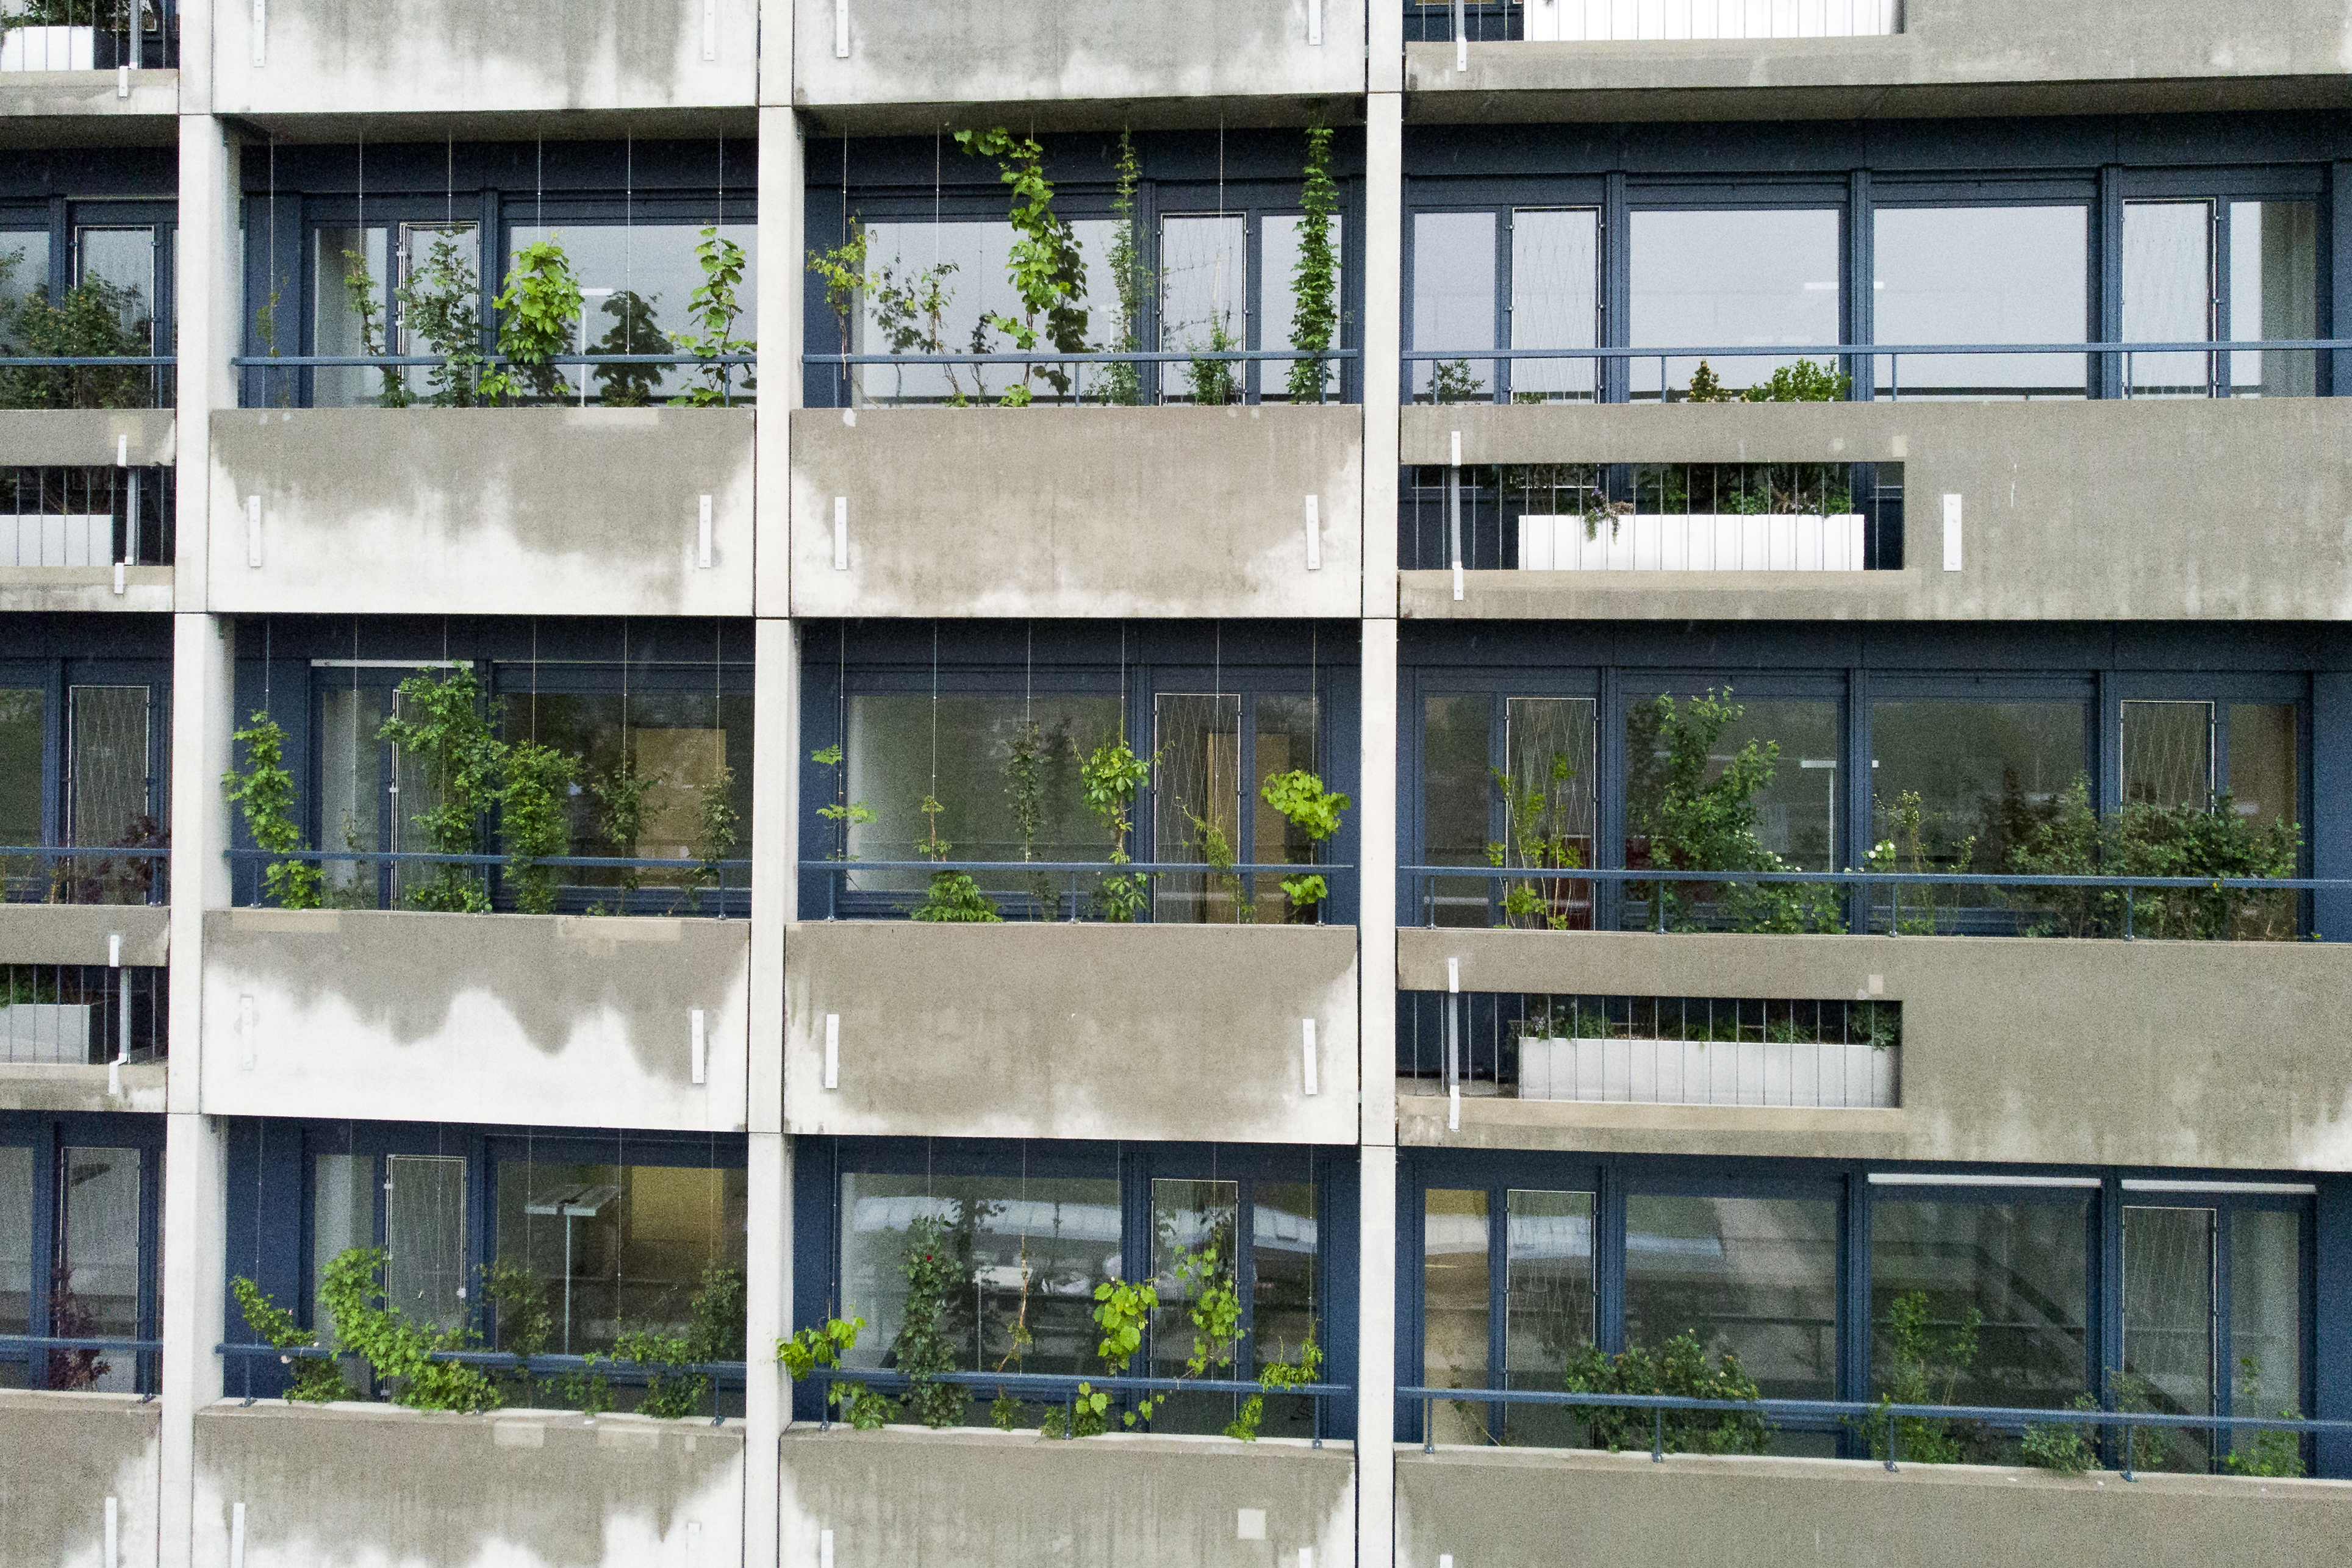 Bepflanzte Balkonfassade am Stadtspital Zürich Triemli.